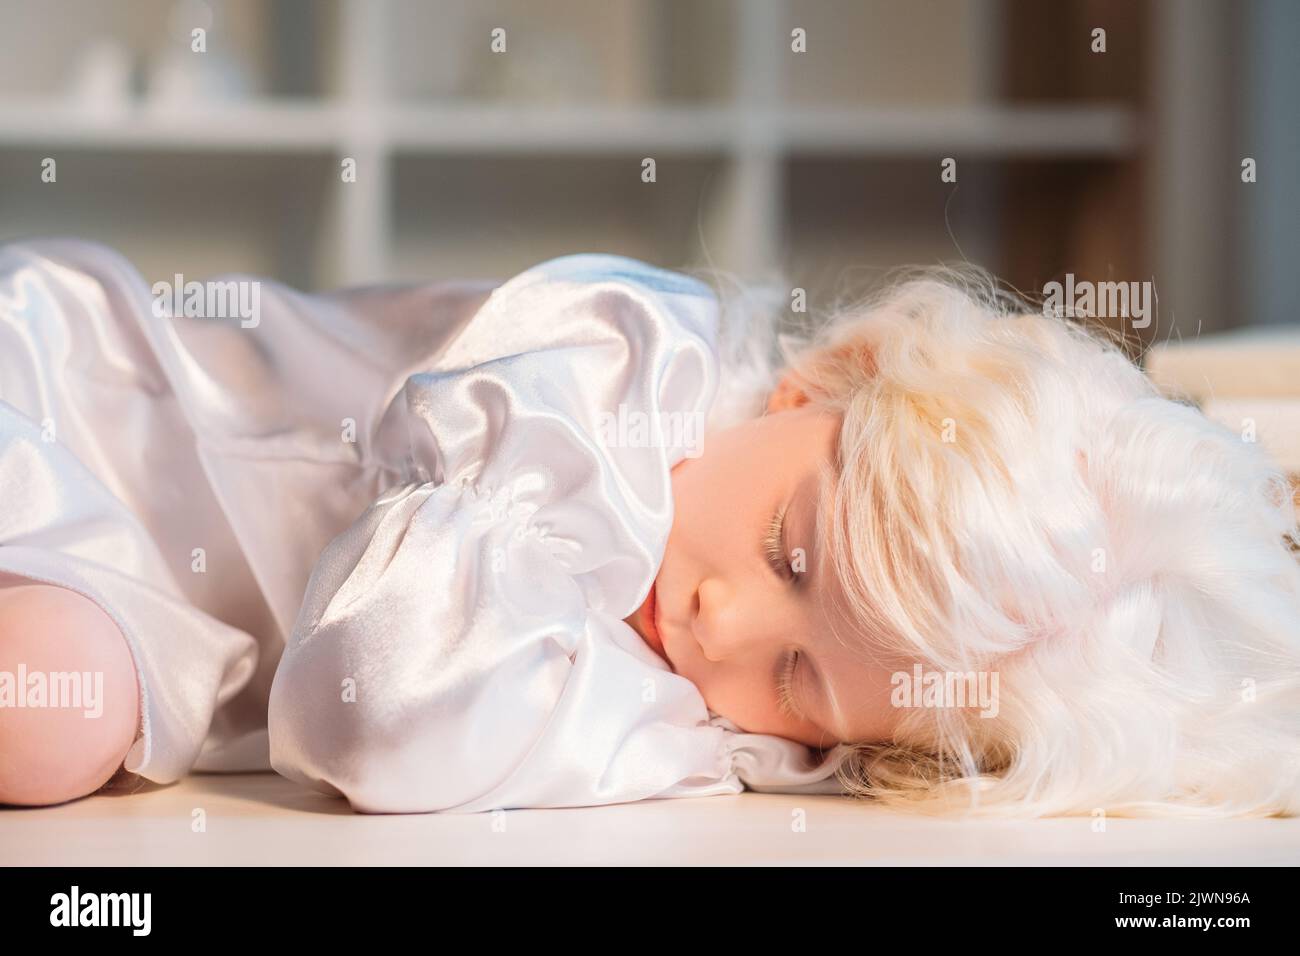 child nap kid innocence cute blonde girl sleeping Stock Photo